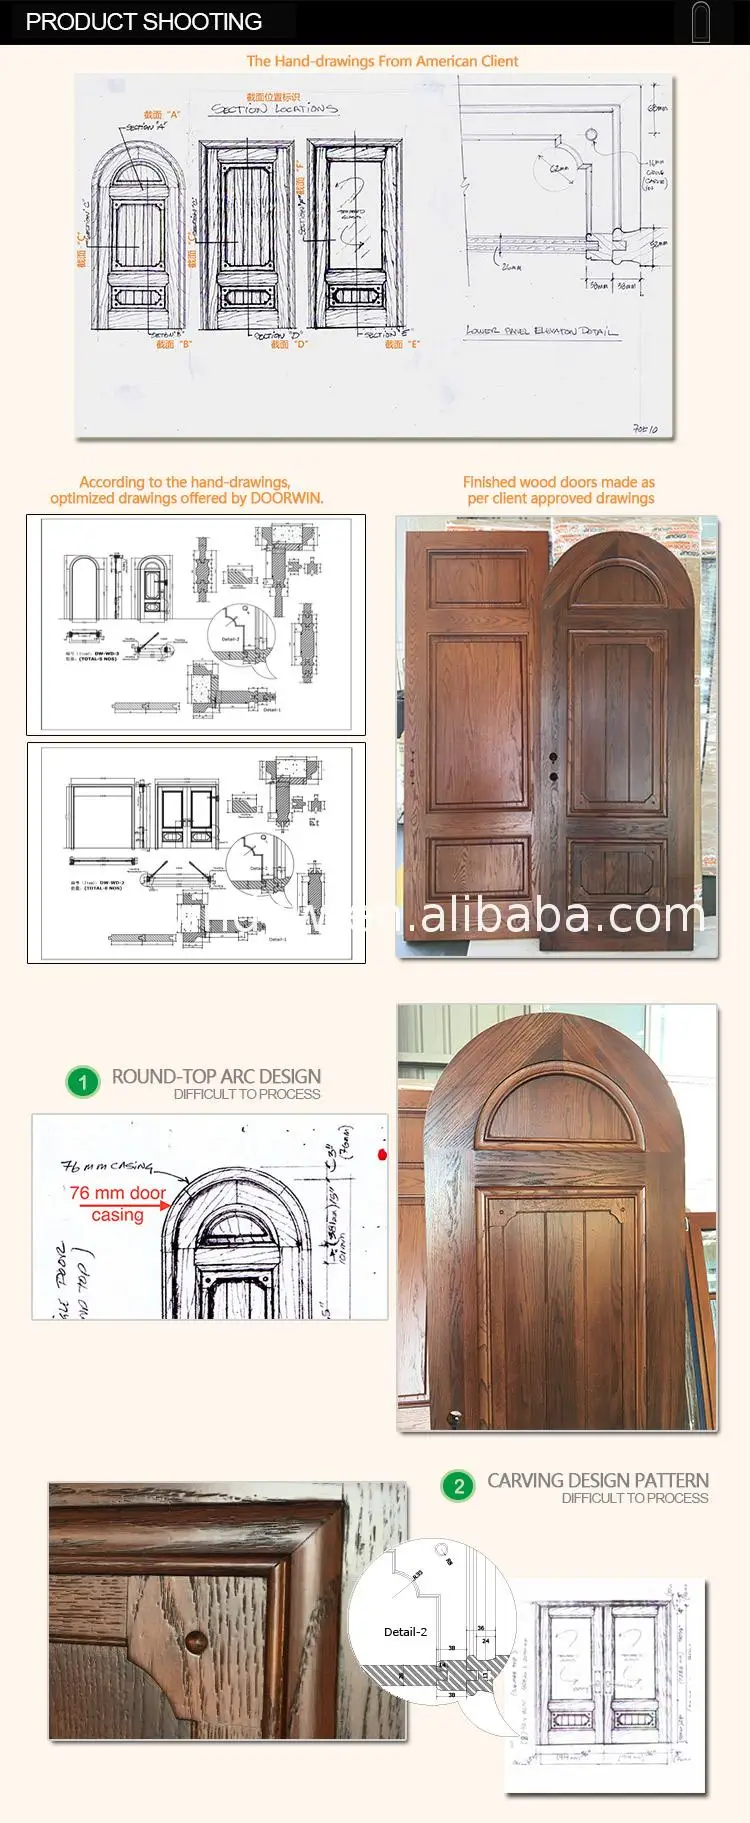 Wholesale price solid oak wood interior doors six panel uk